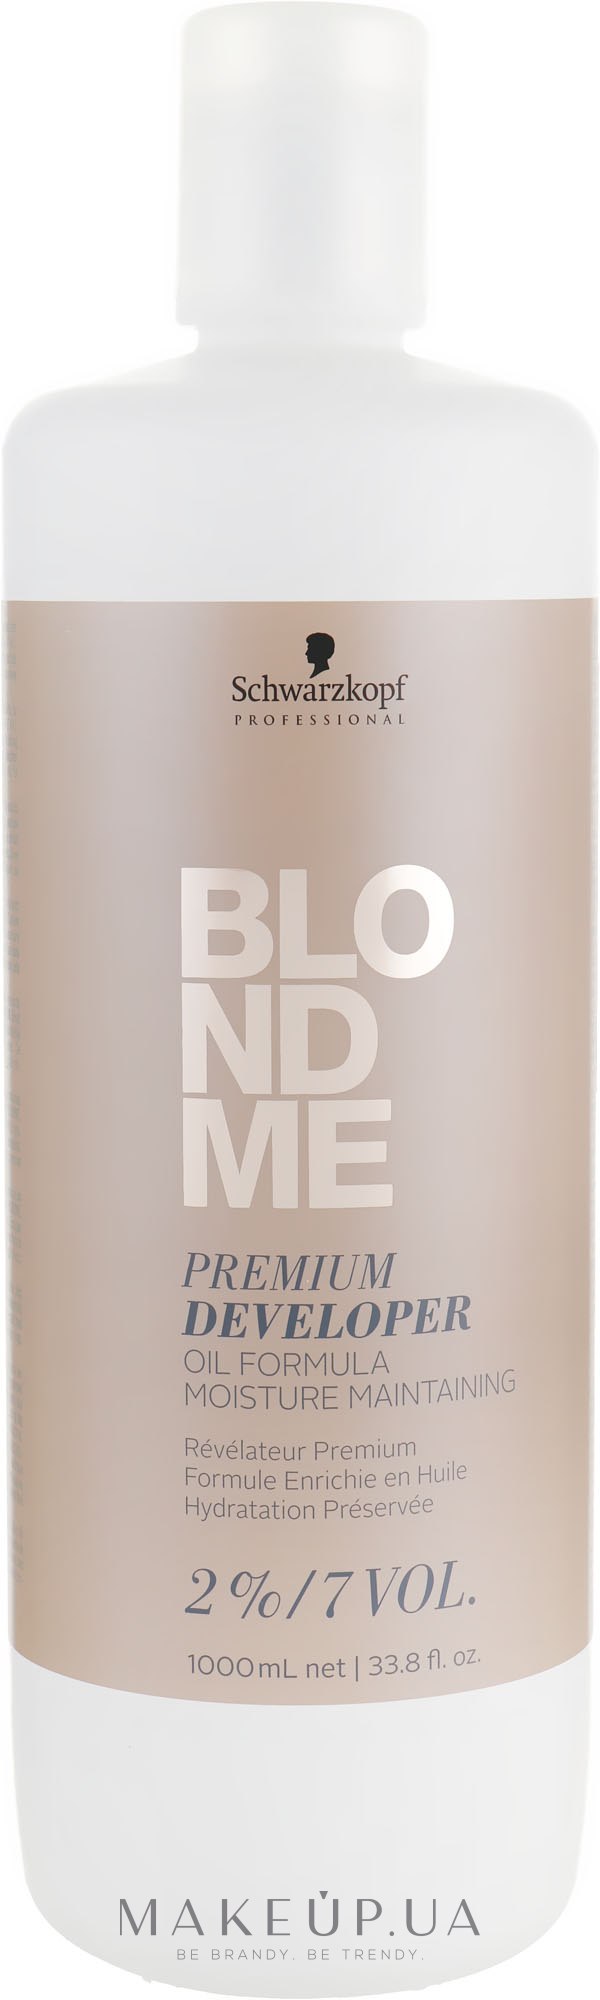 Премиум-окислитель 2%, 7 Vol. - Schwarzkopf Professional Blondme Premium Developer 2% — фото 1000ml